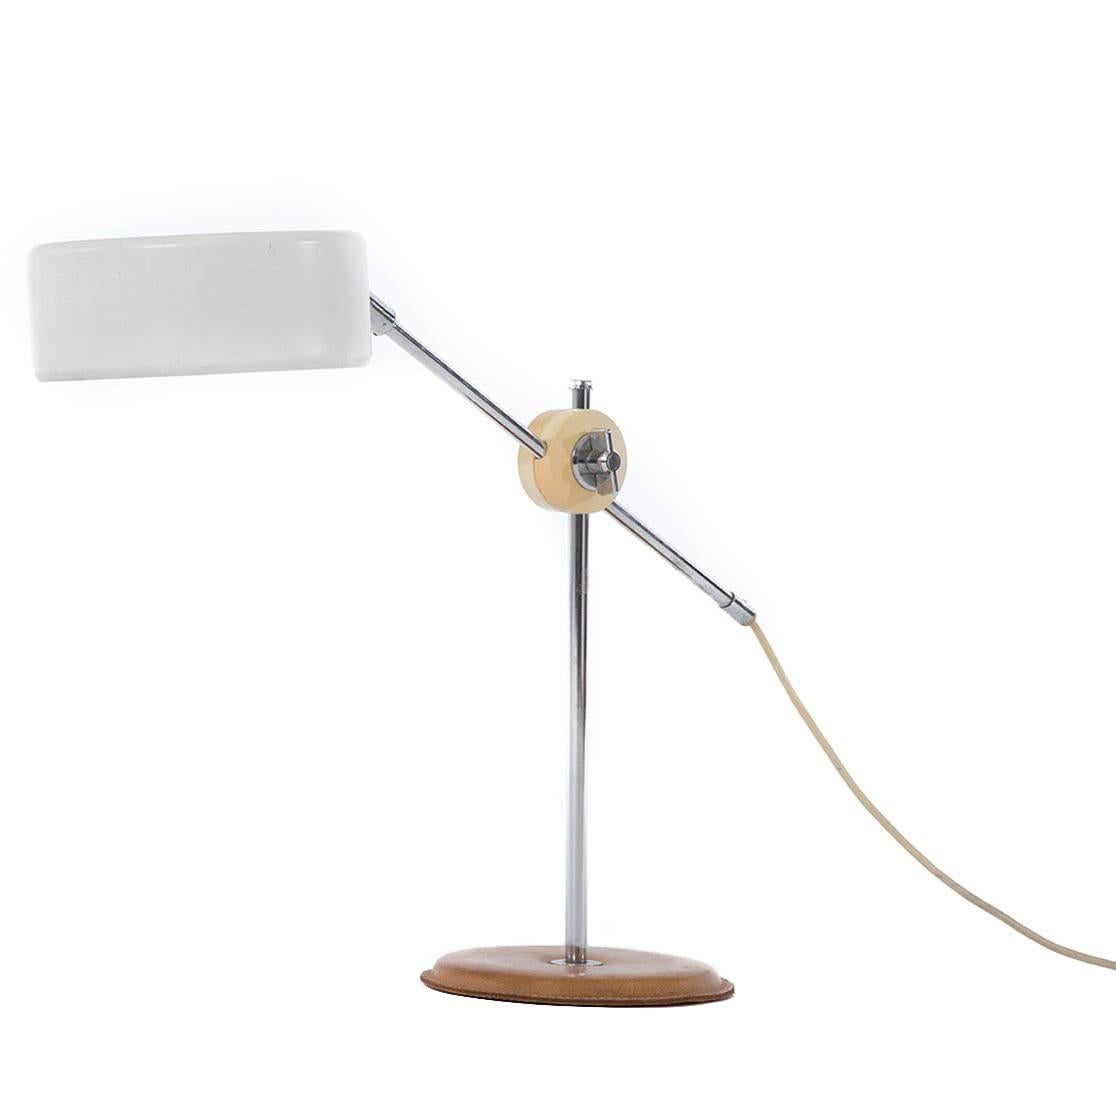 Danish Modern Desk Lamp with Leather Base